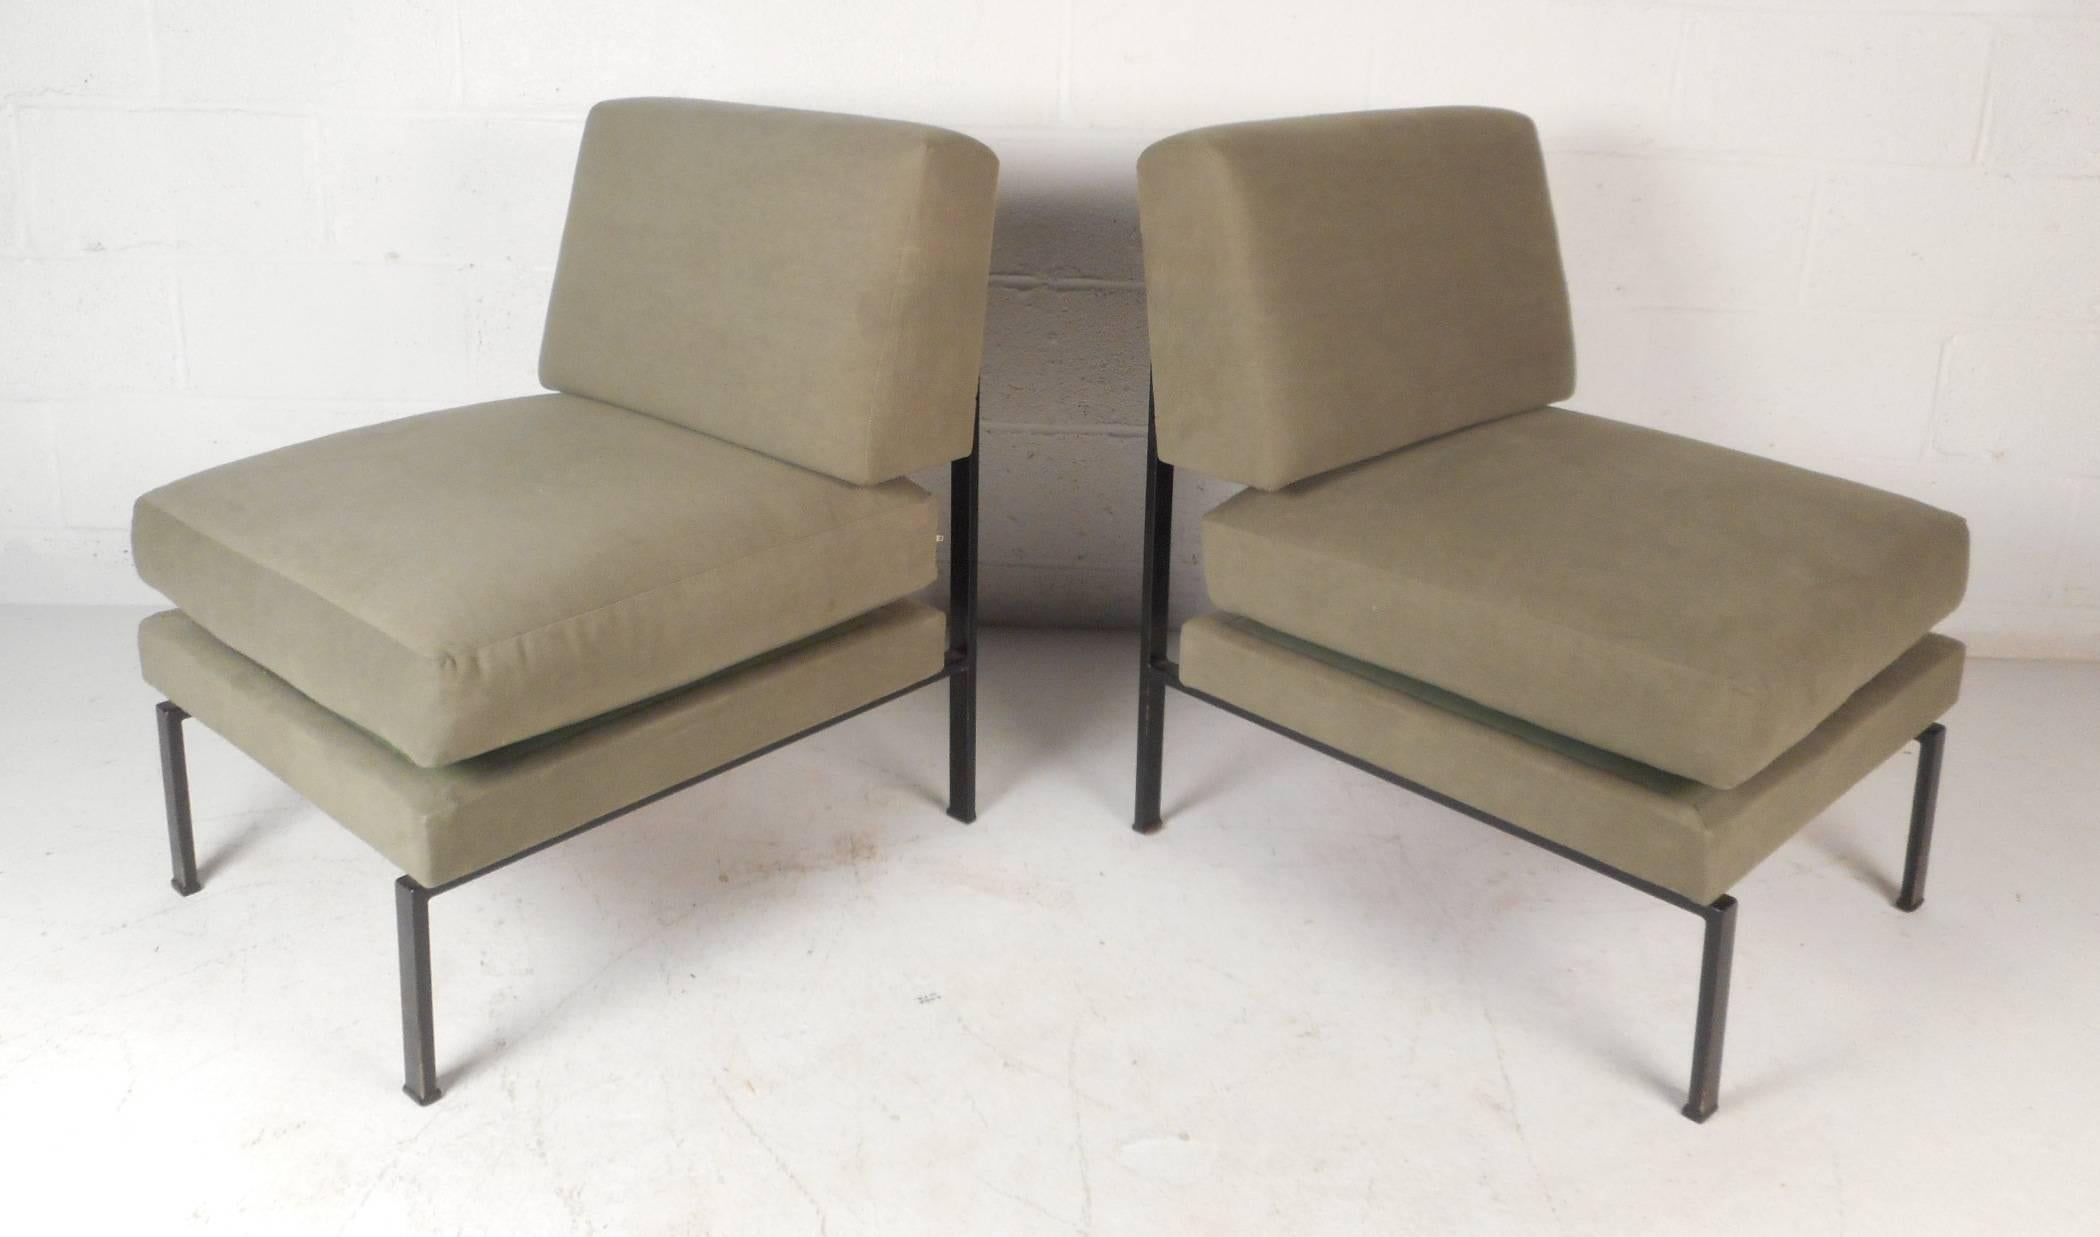 Mid-20th Century Pair of Mid-Century Modern Italian Trafilisa Lounge Chairs with Adjustable Seats